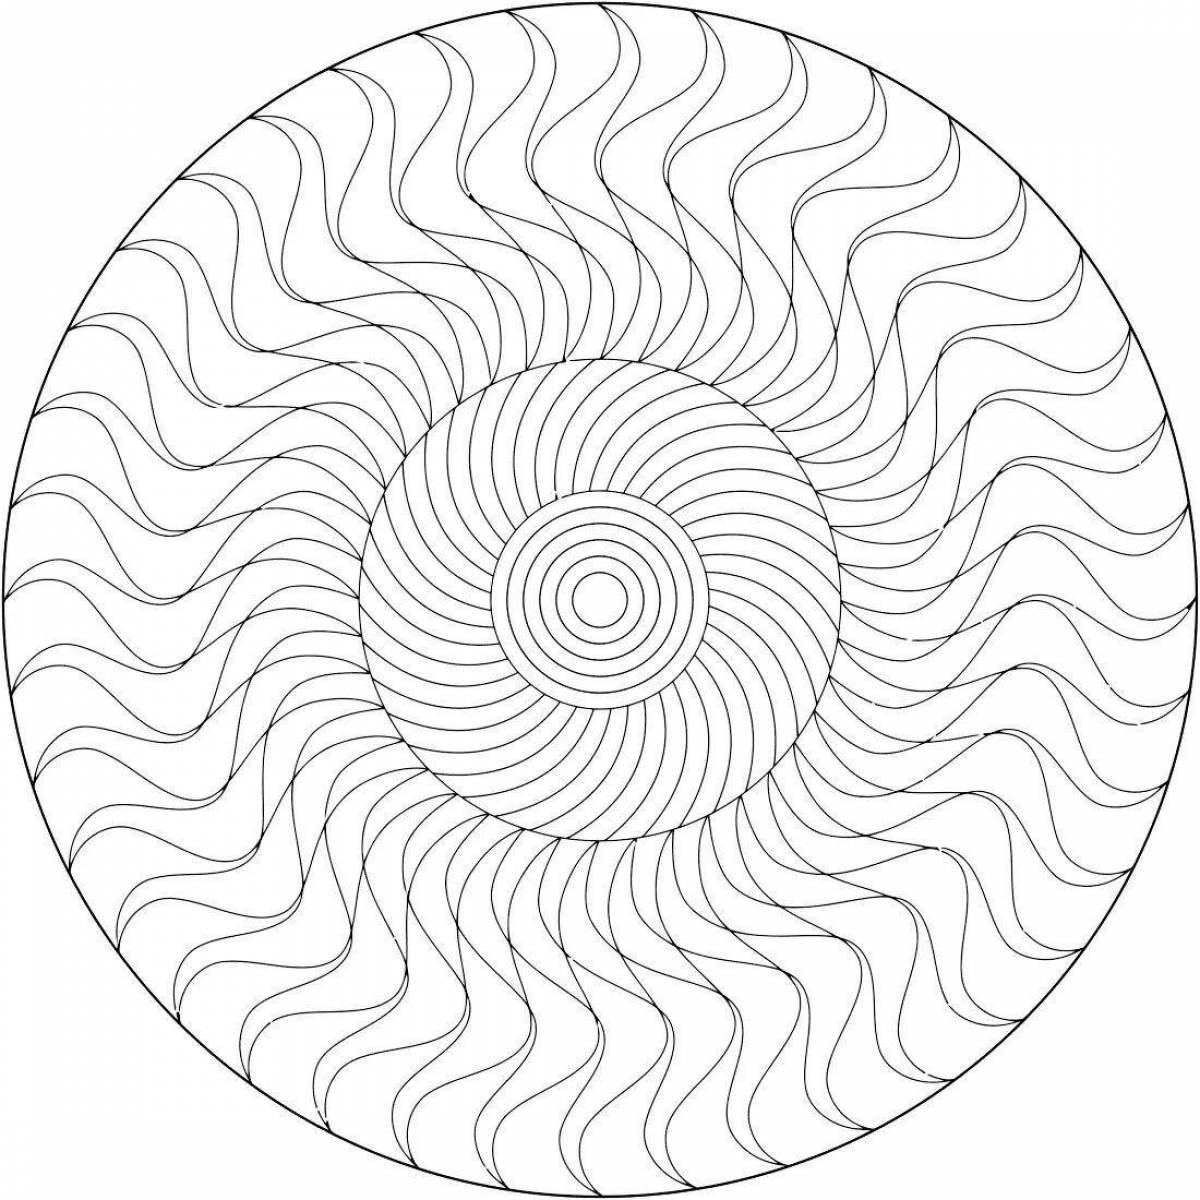 Mystical coloring hidden spiral pattern